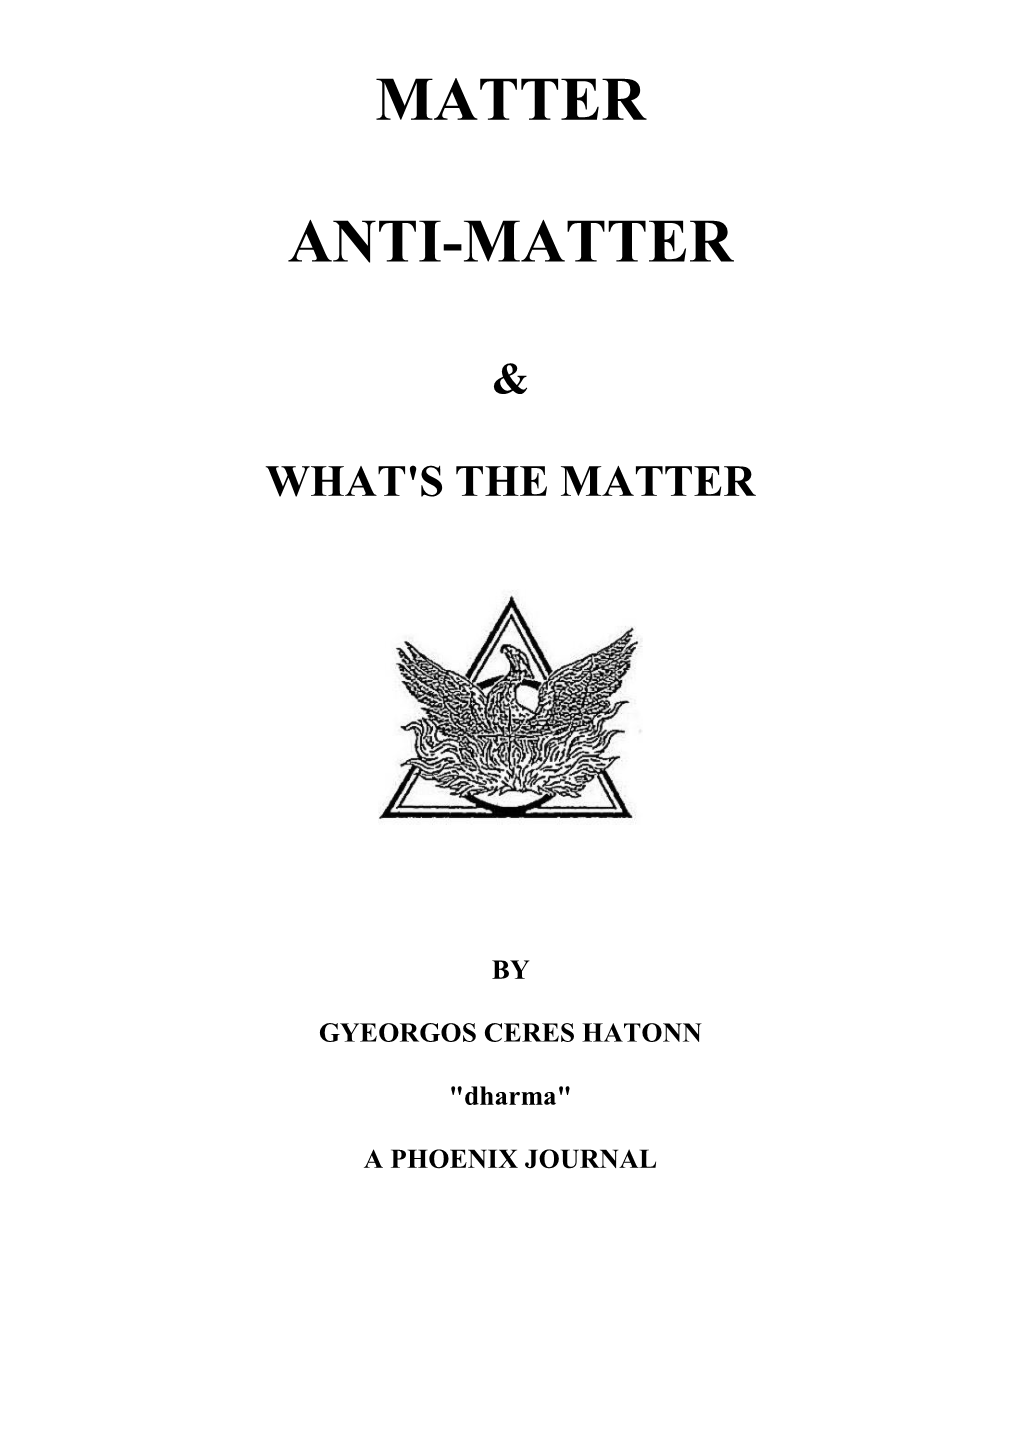 Pj 22 -Matter Anti-Matter